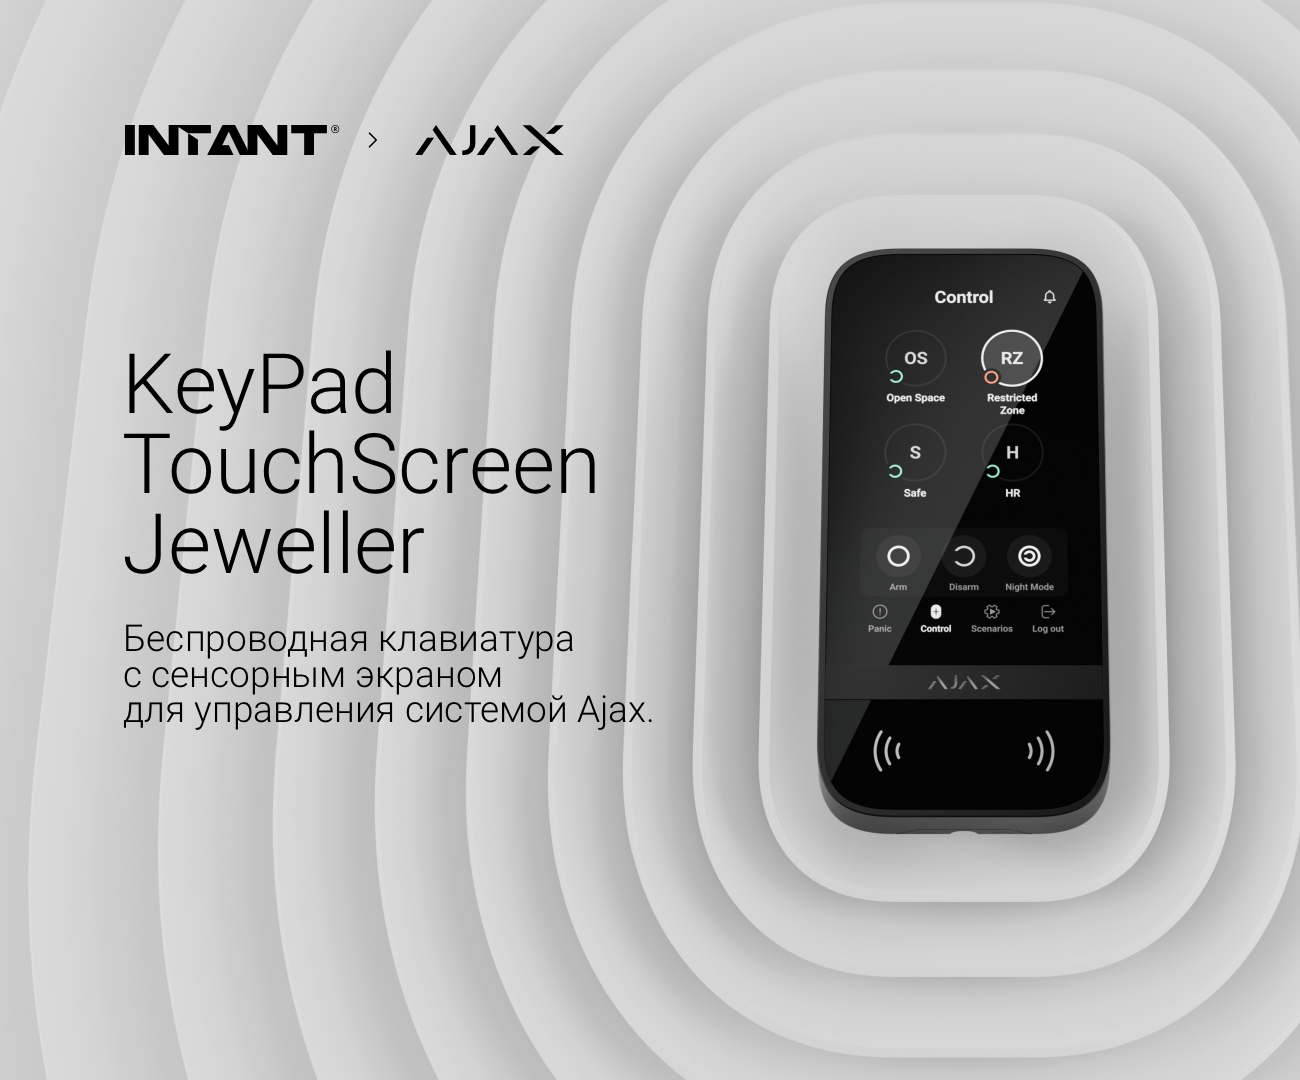 KeyPad TouchScreen Jeweller - продукт года<